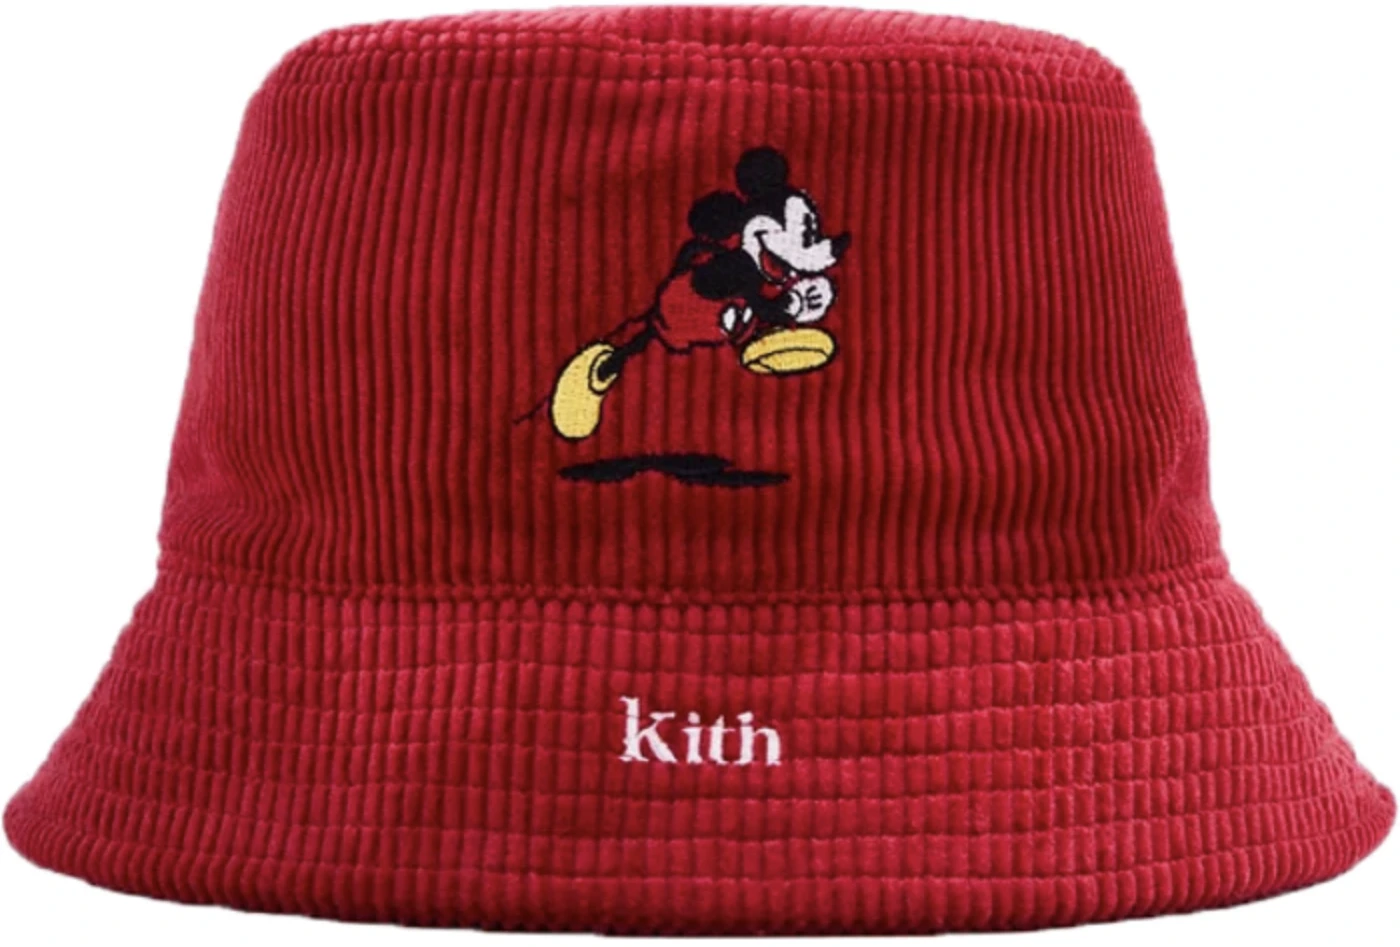 Kith x Disney Mickey Corduroy Bucket Hat Red - FW19 - US